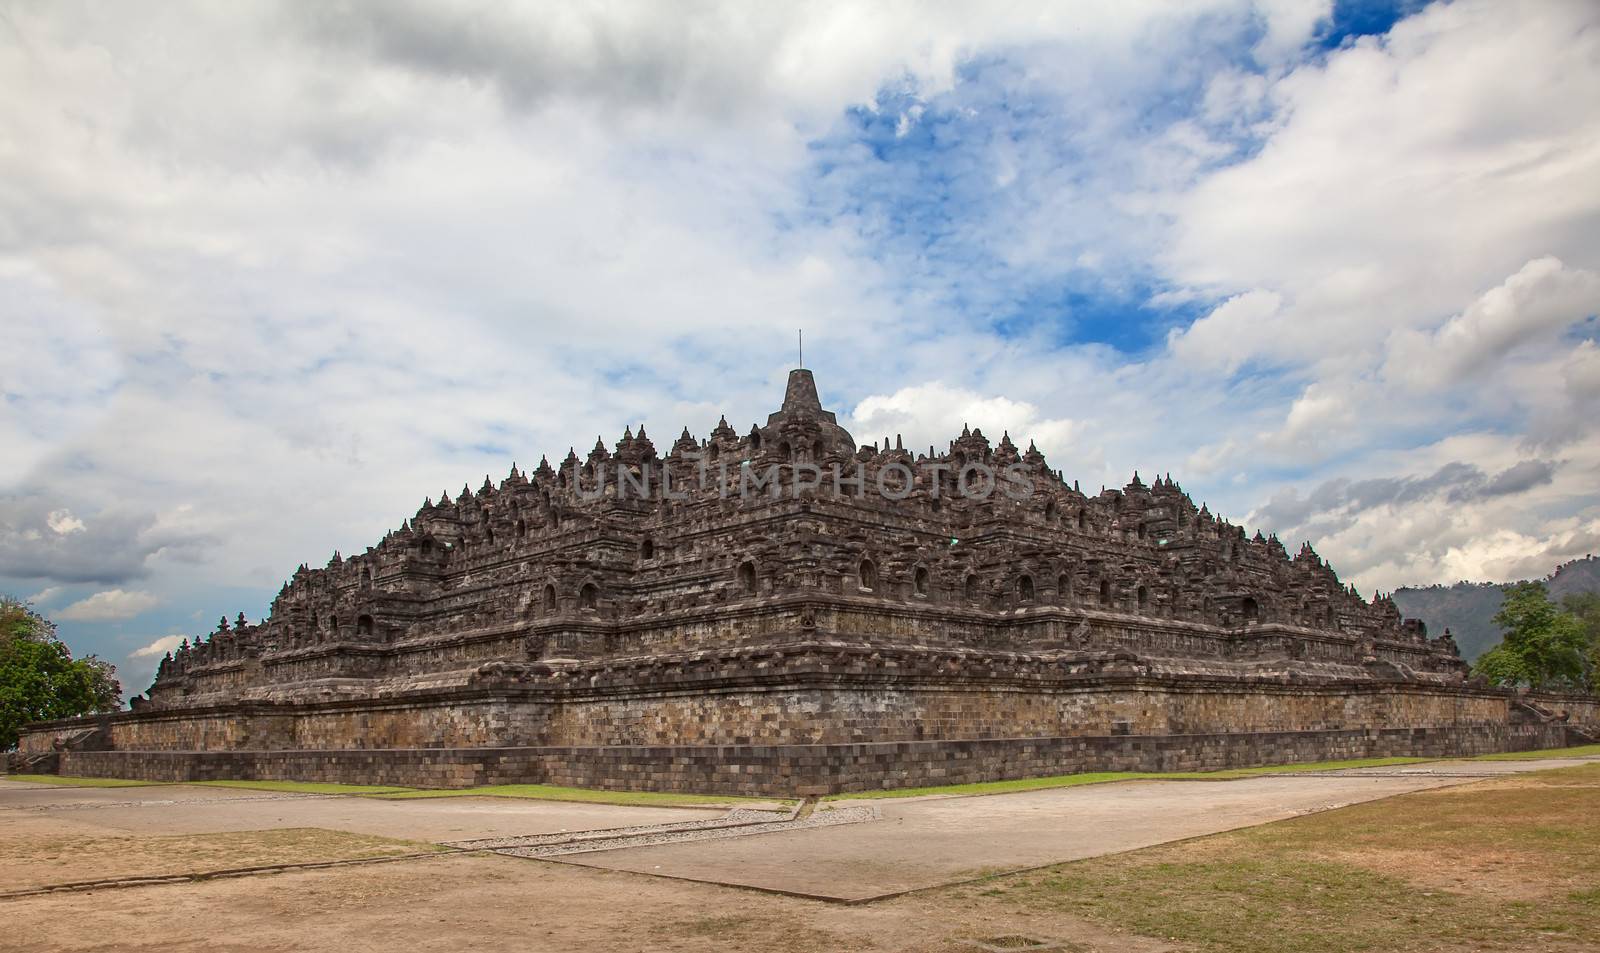 Borobudur temple in Indonesia by swisshippo